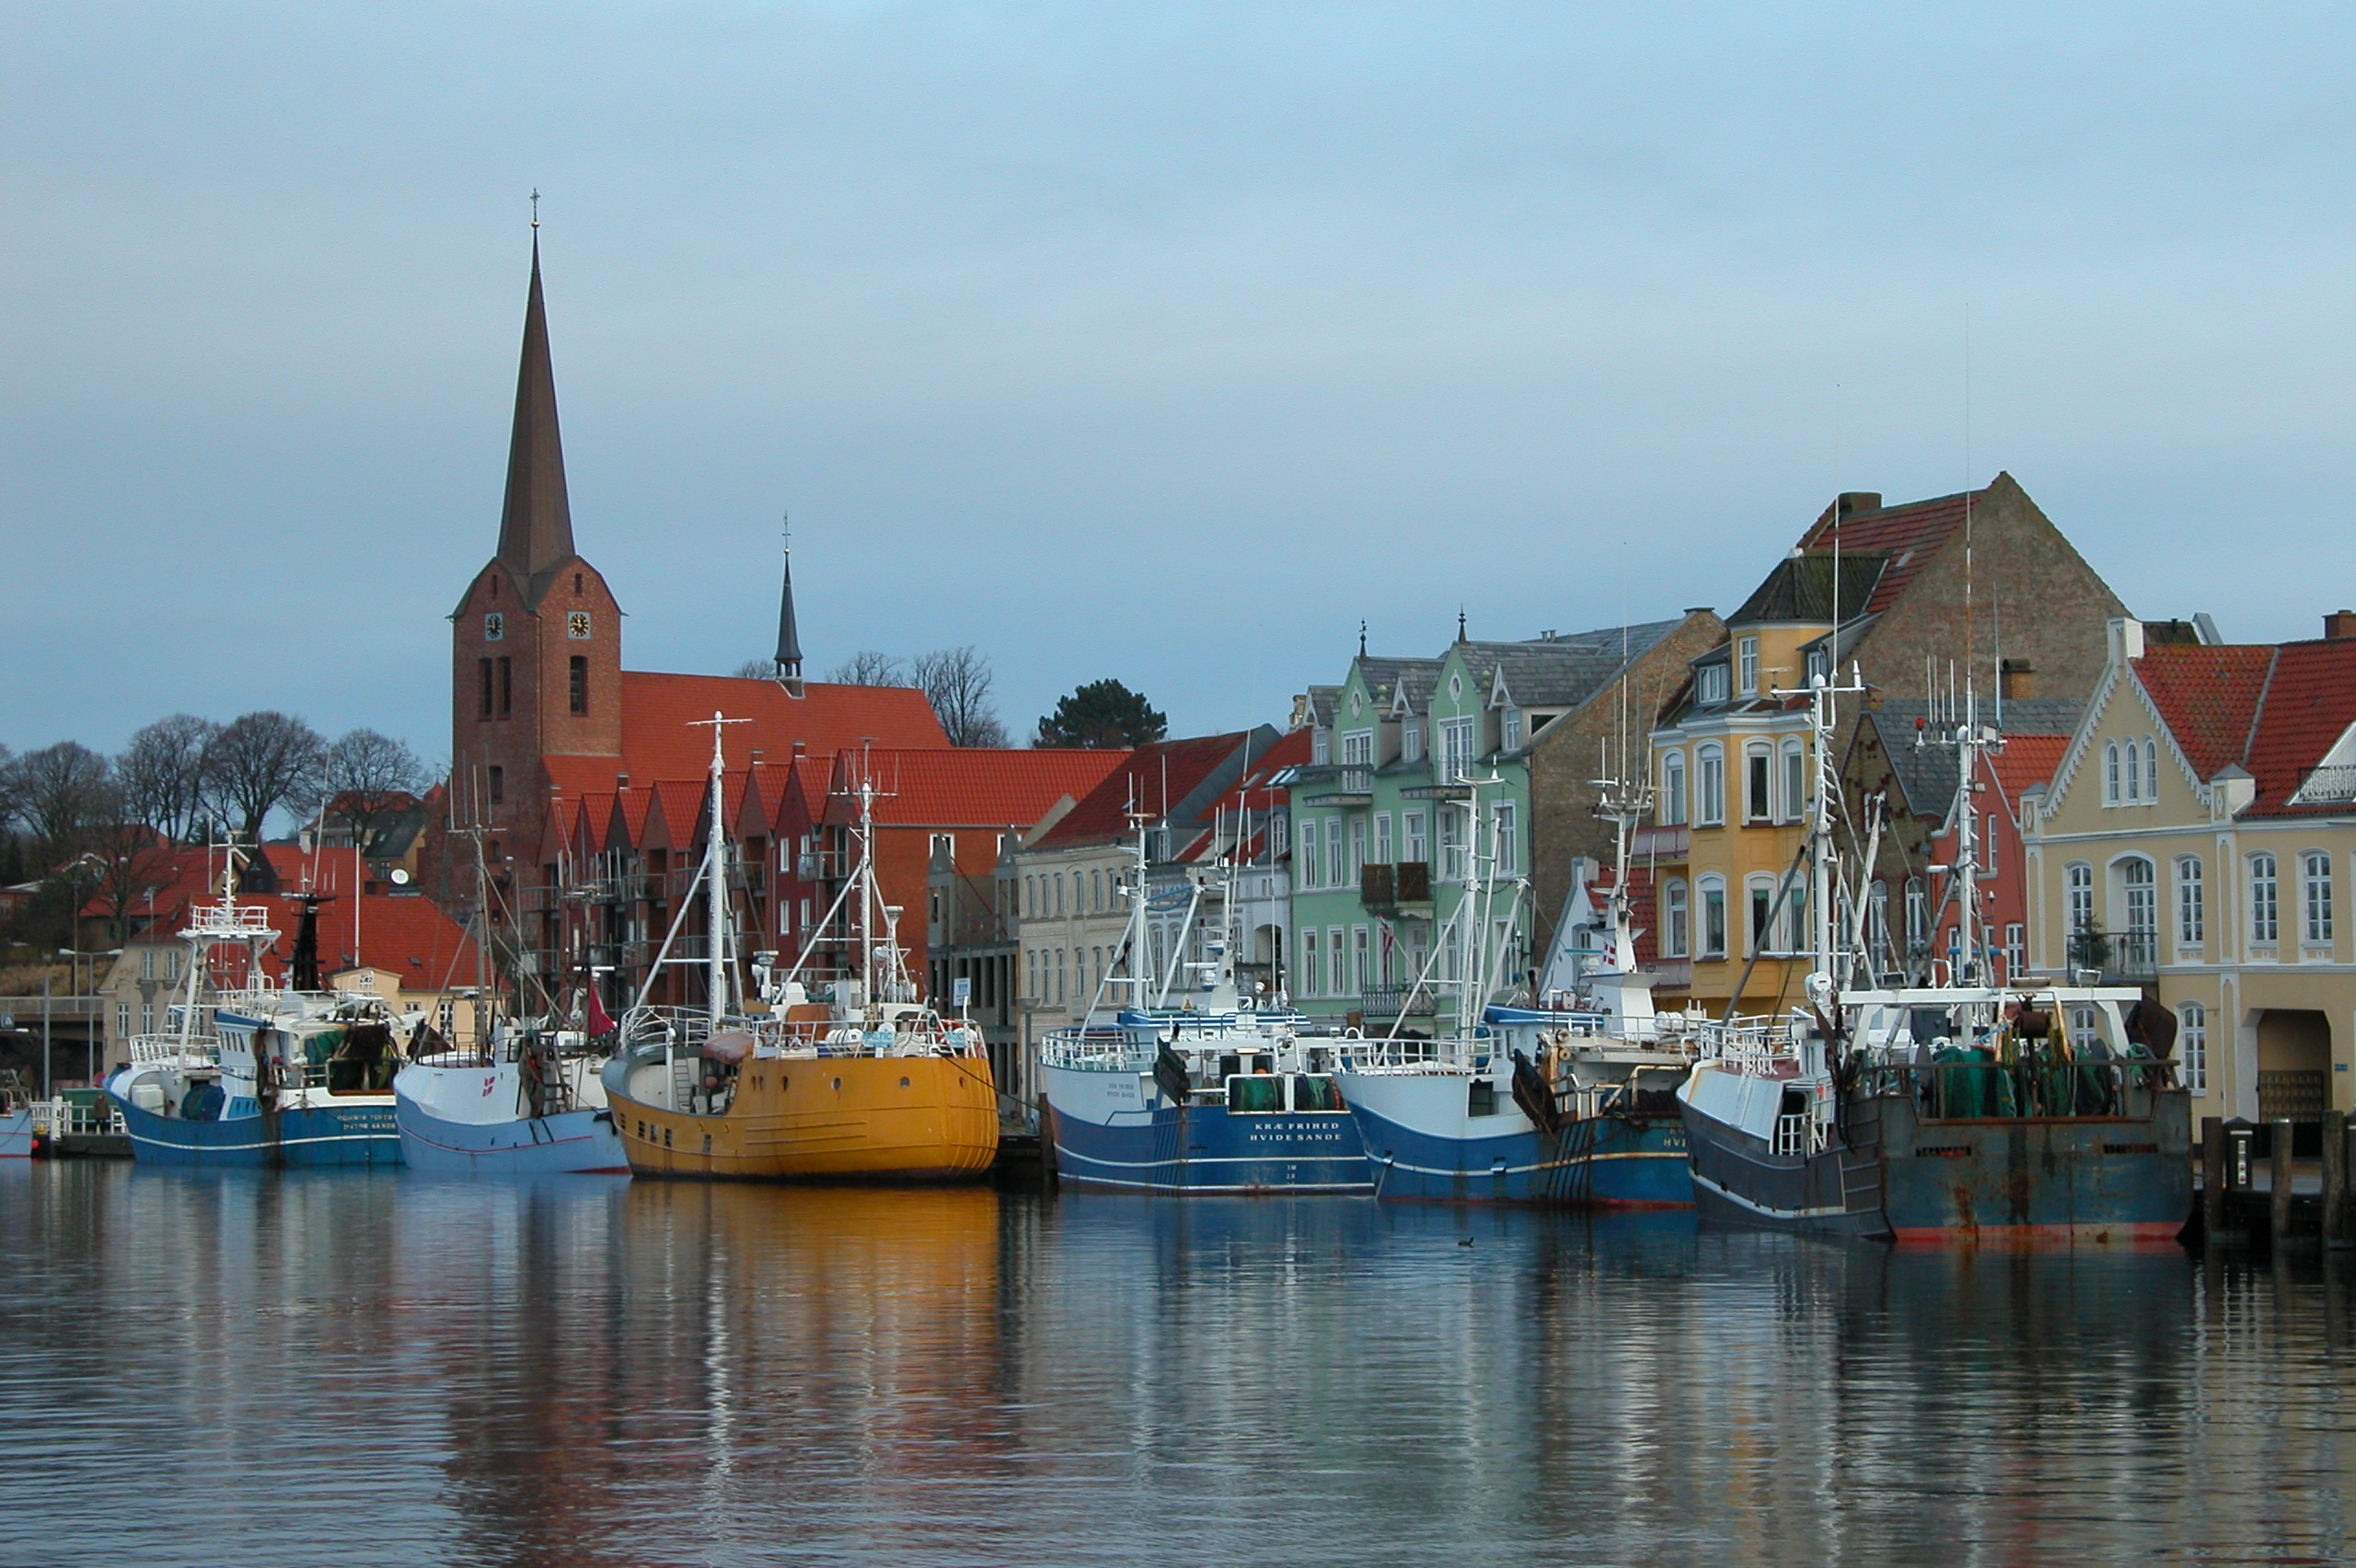 Сённерборг (Sønderborg)